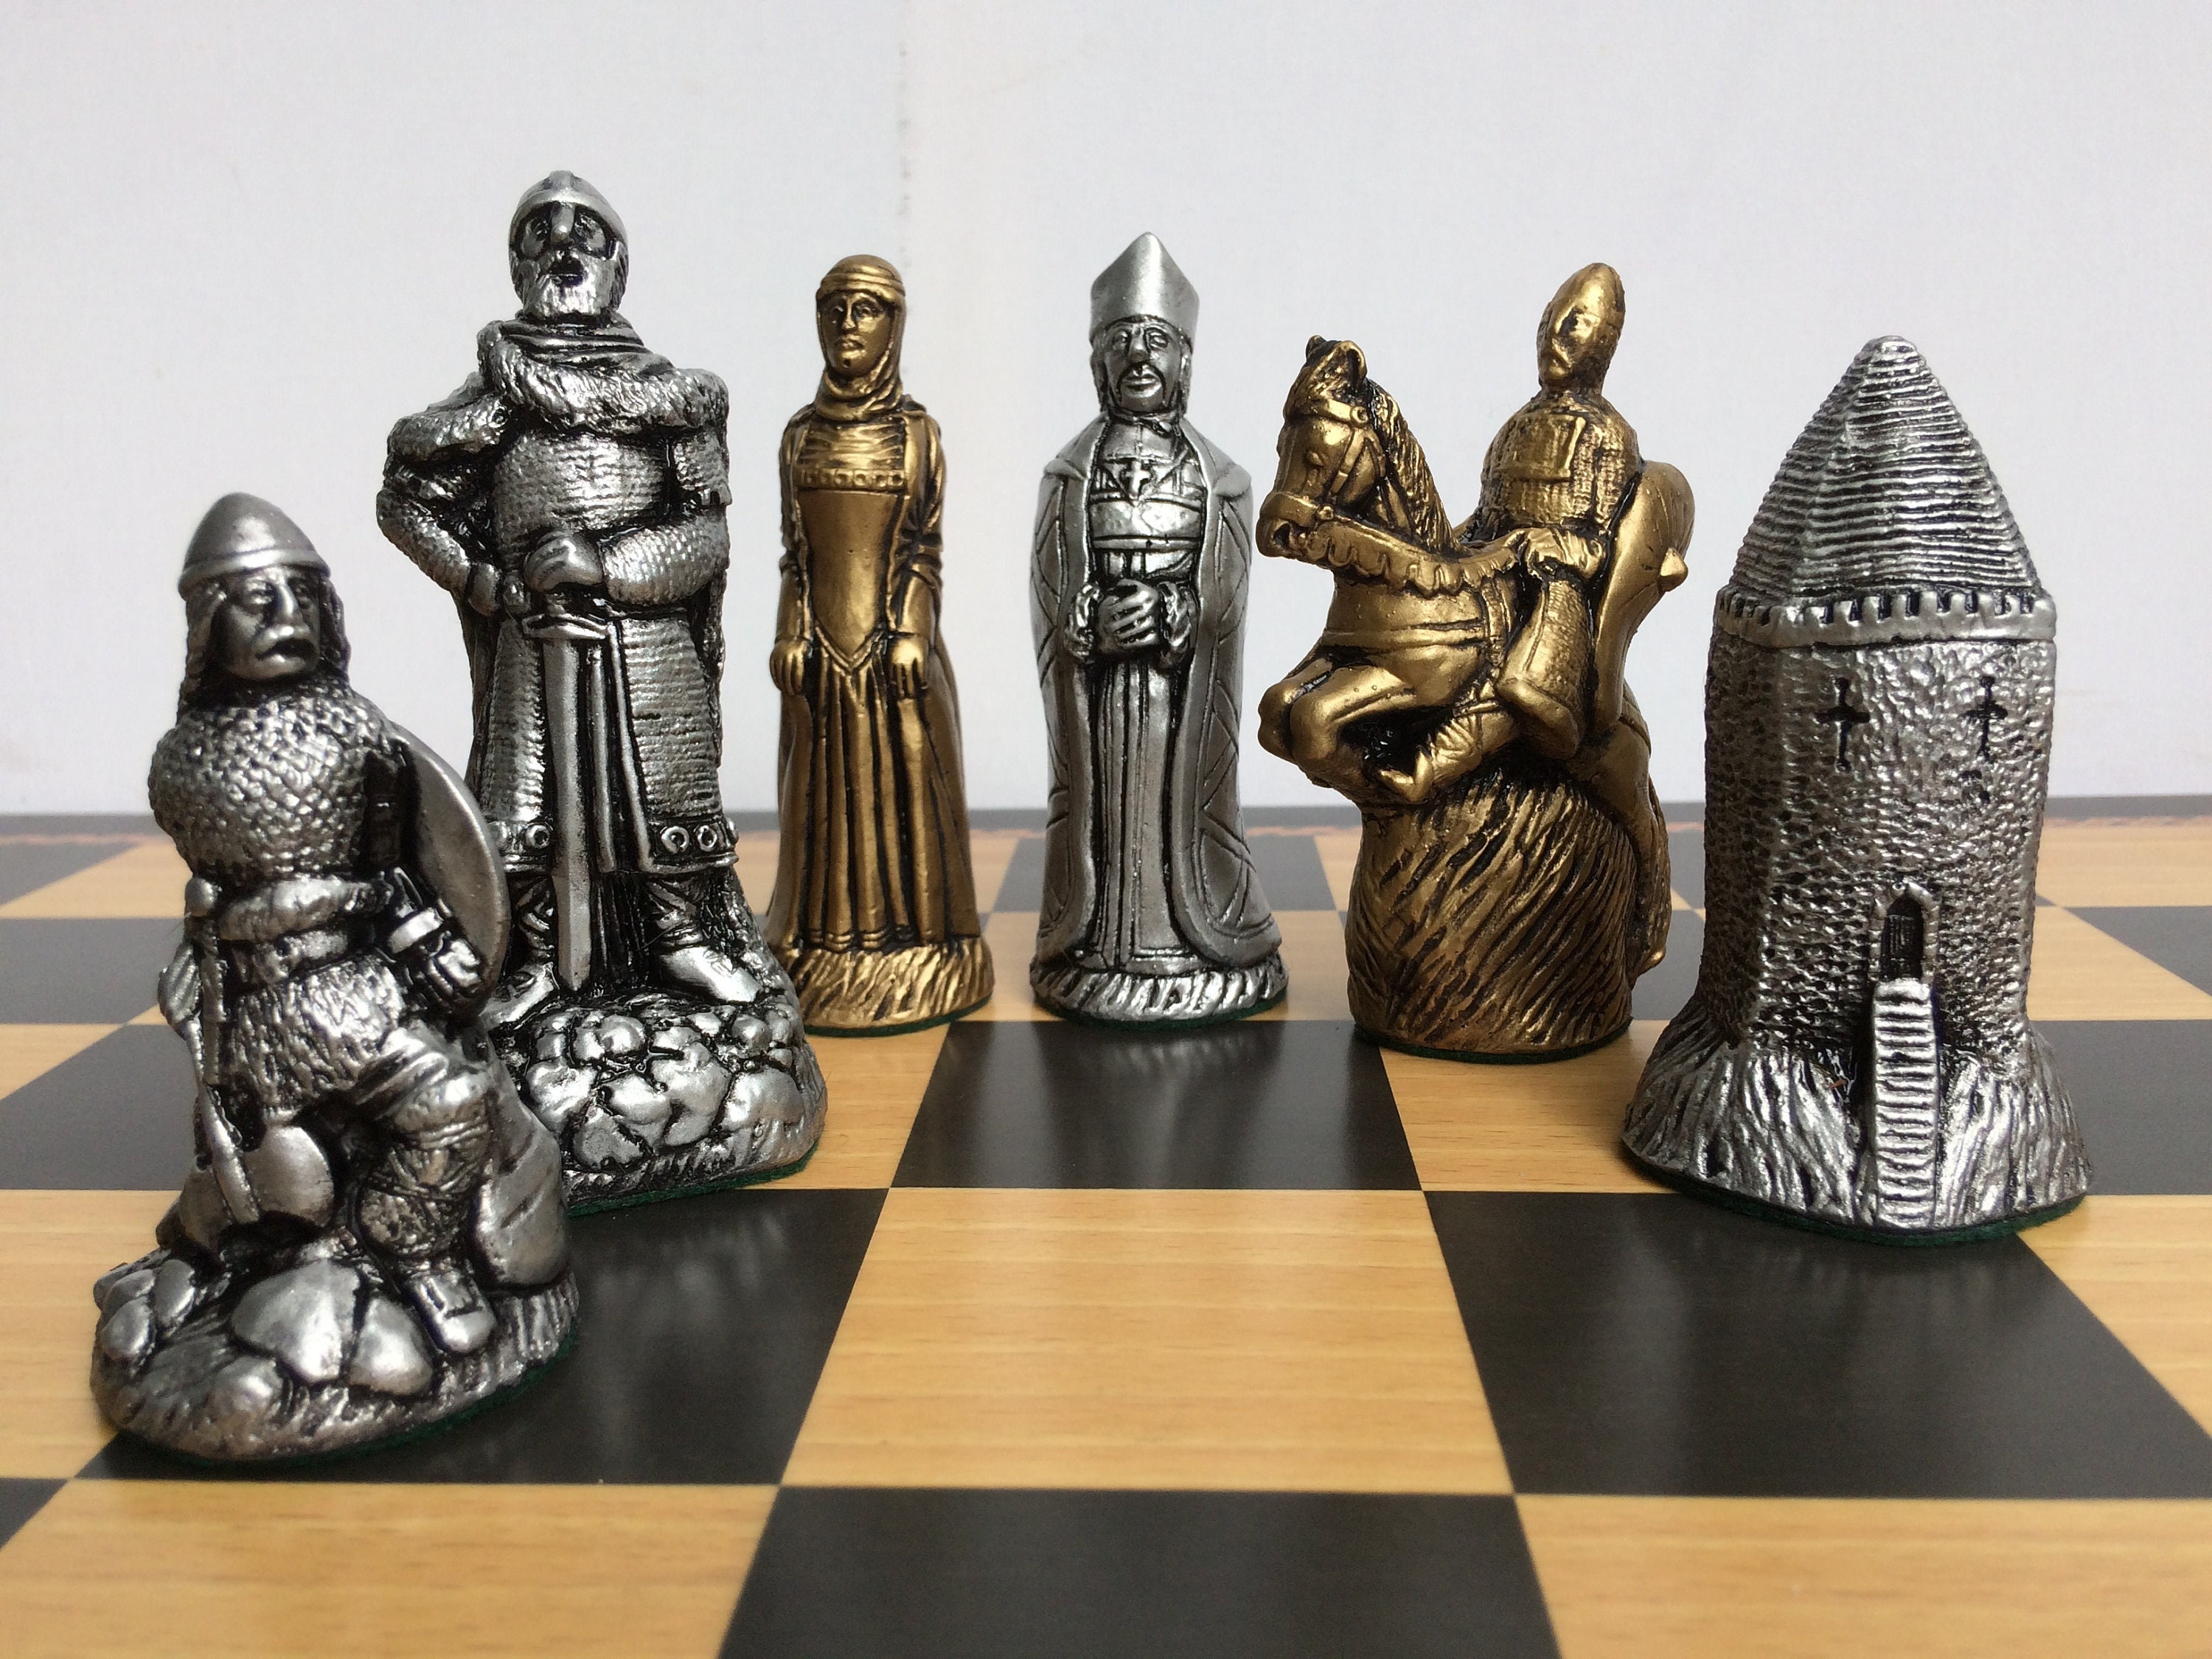 Chess Sets, Uk's Best Chess Set Range